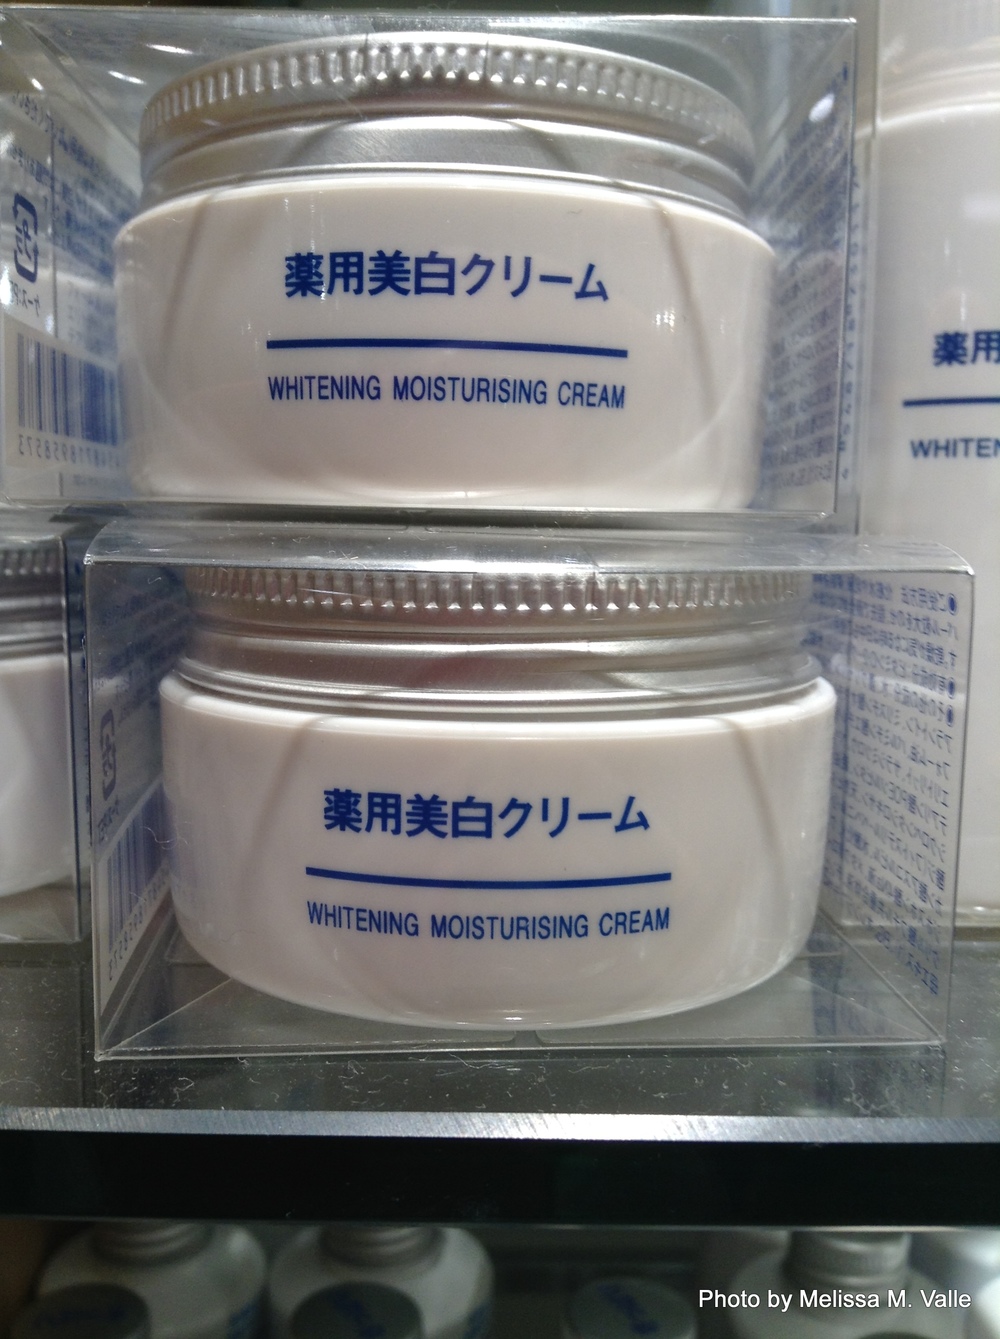 7.21.14 Tokyo, Japan- Ginza, Muji whitening products (1).JPG